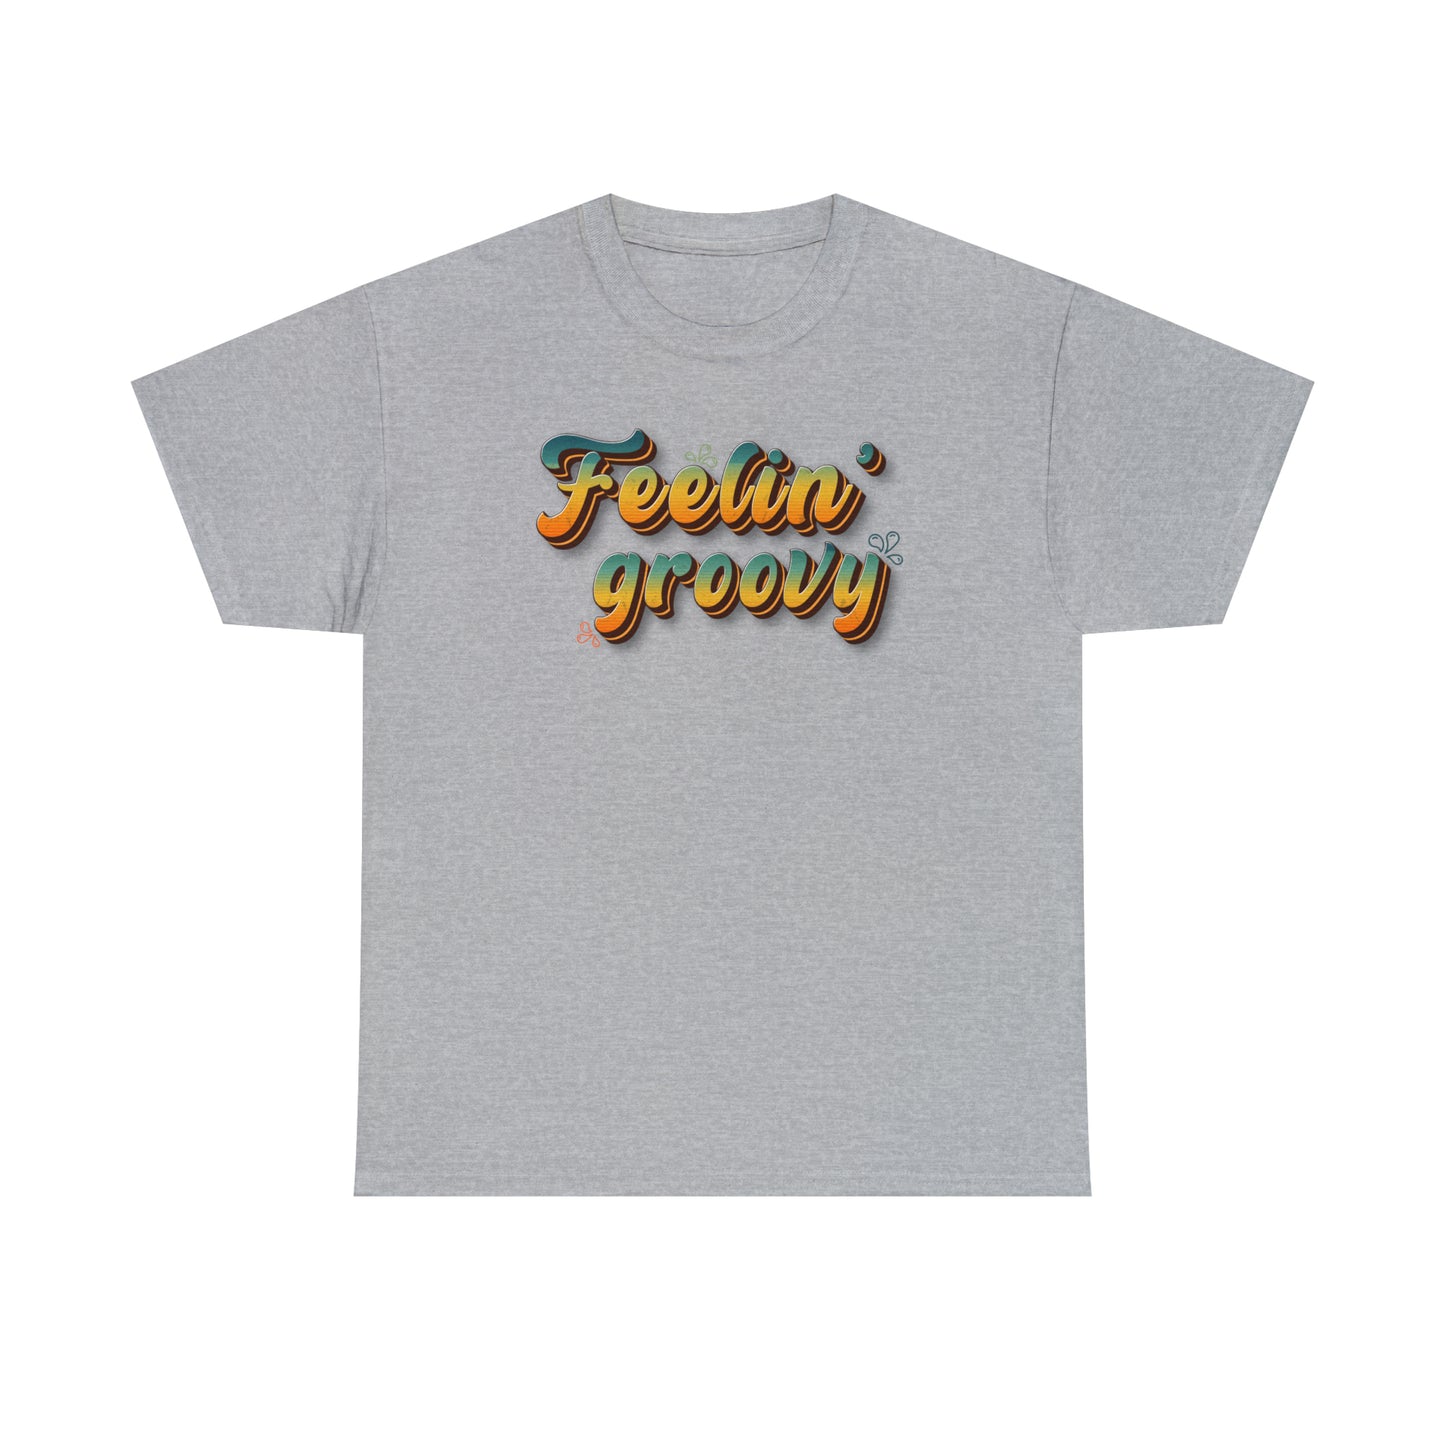 Groovy T-Shirt For Feeling Groovy Shirt For Seventies TShirt Retro 70's Vibe T Shirt For Retro Gift For Seventies Party Shirt Groovy Gift